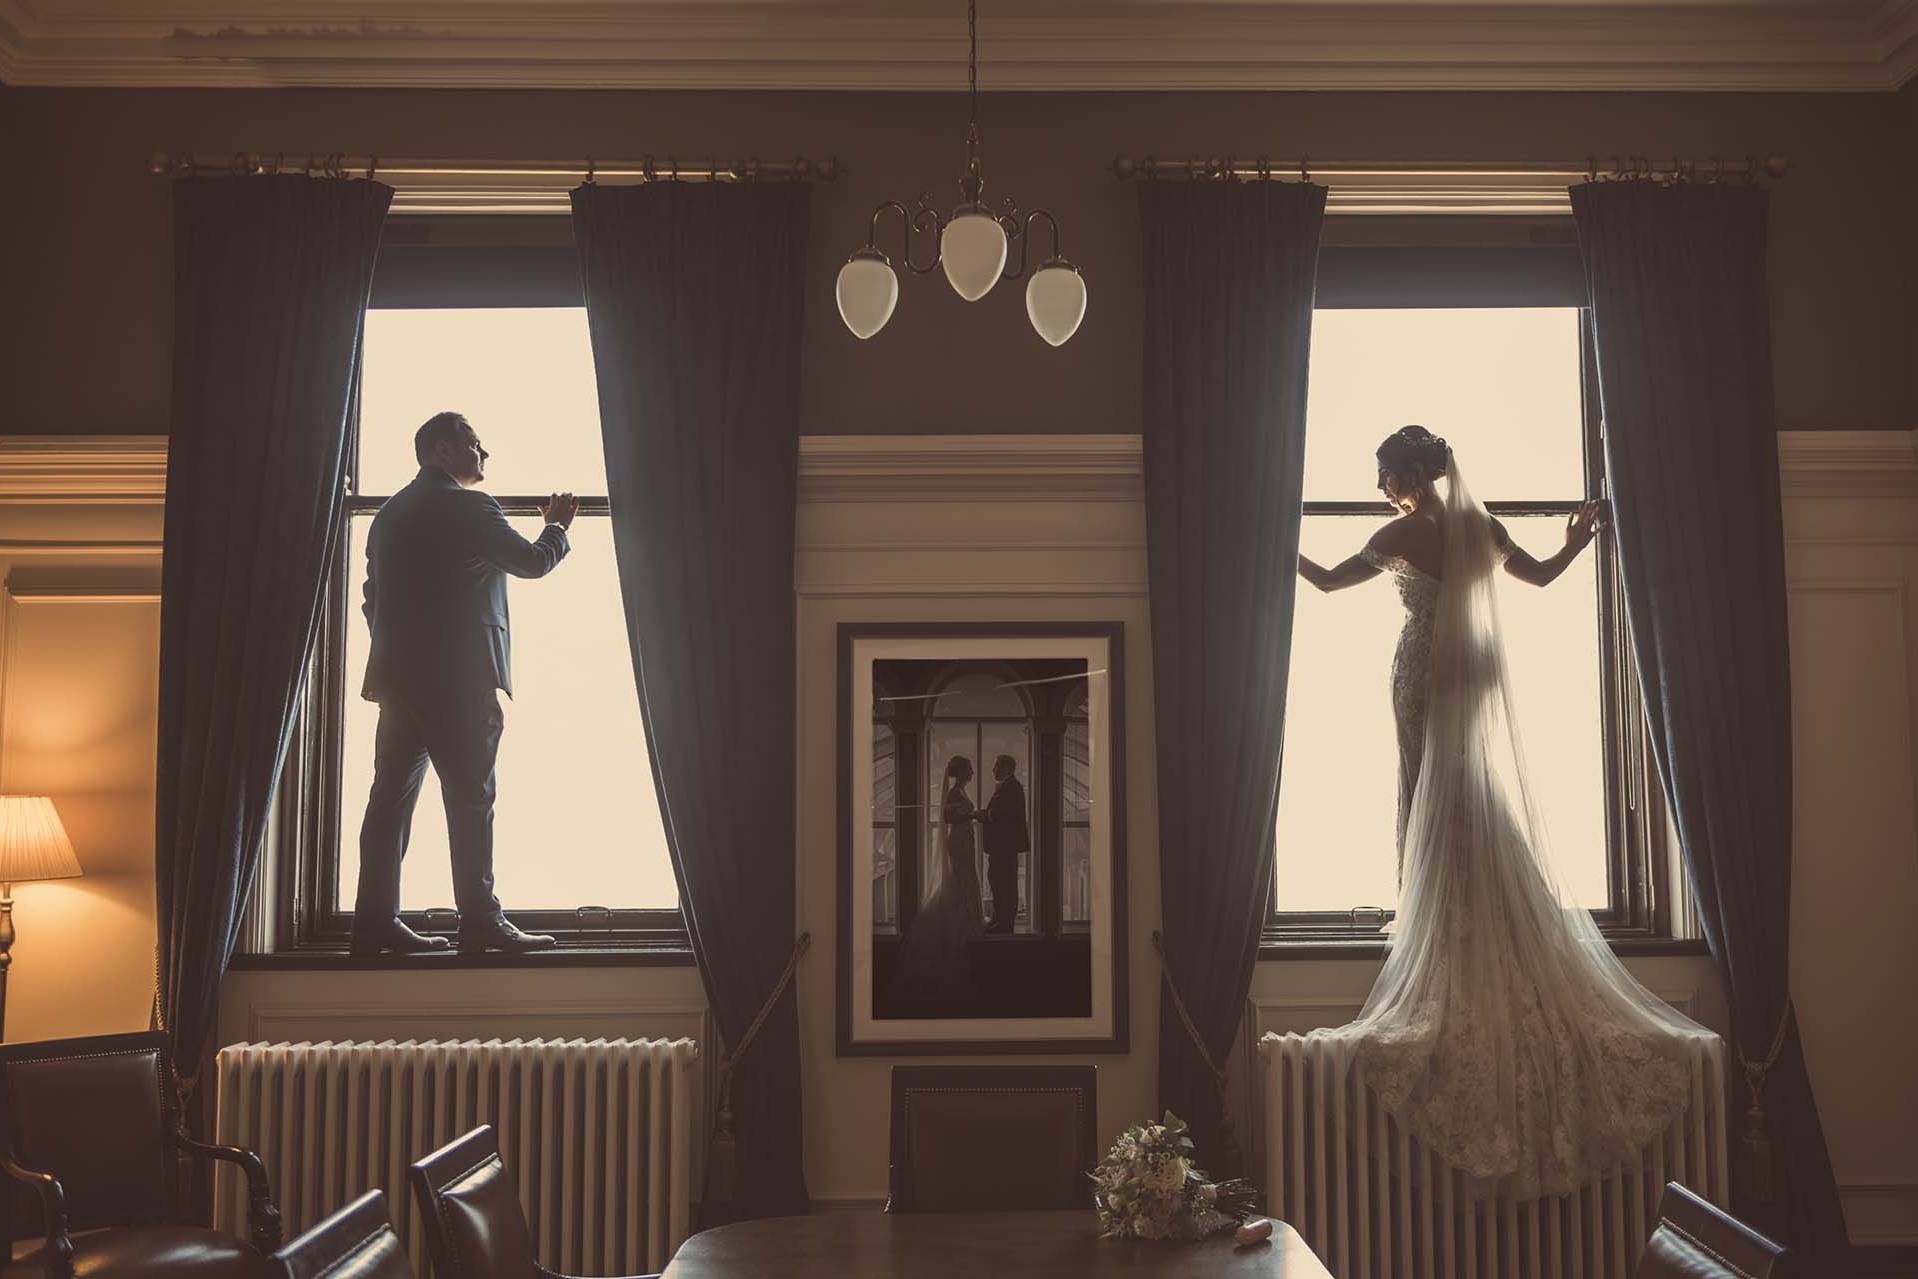 Titanic Hotel Wedding - Robyn & David standing in the window frames of the Ballroom